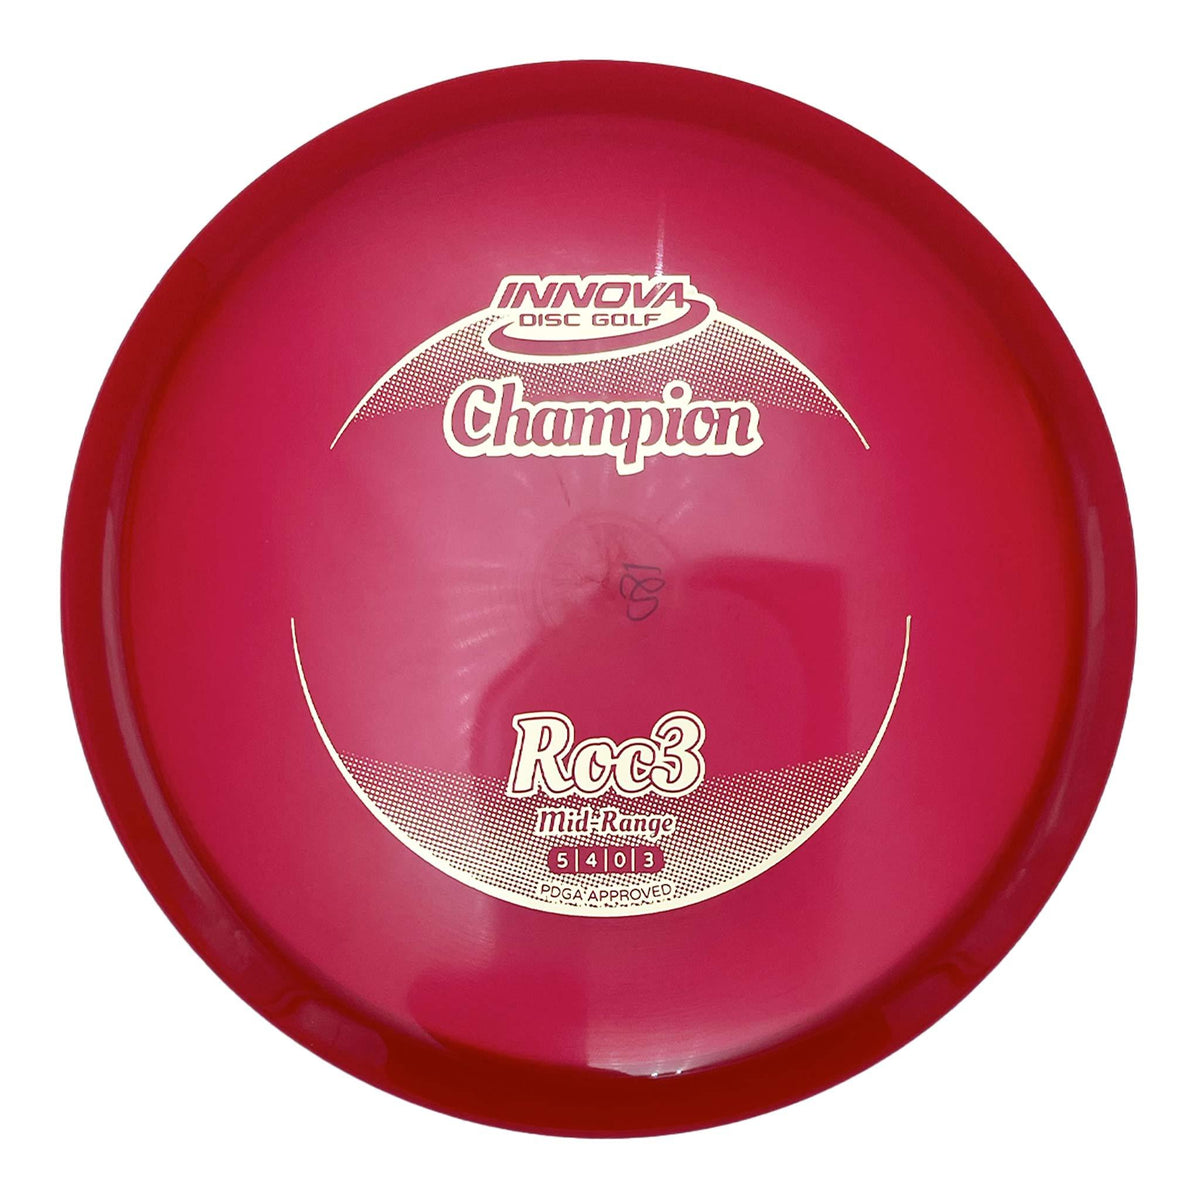 Innova Disc Golf Champion Roc3 midrange - Red